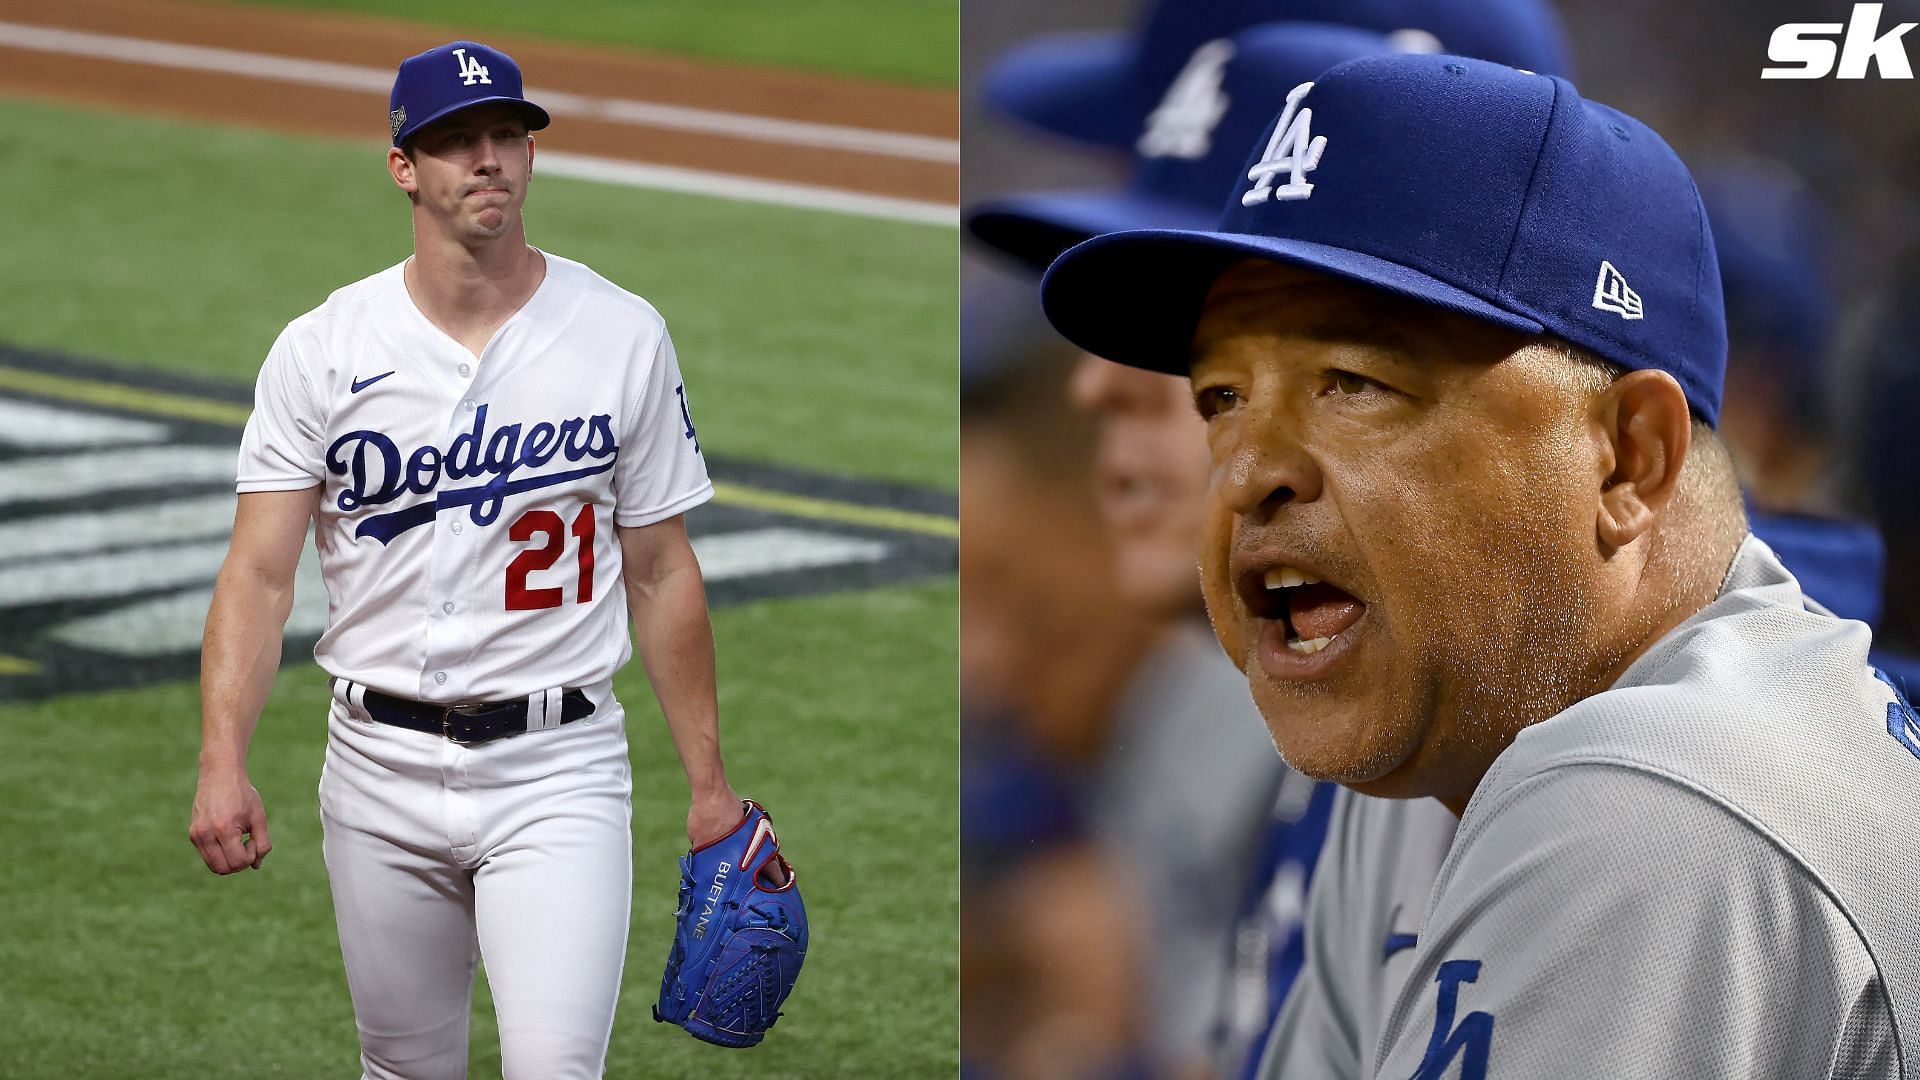 Walker Buehler Injury Update: Dave Roberts shares encouraging news on Dodgers ace